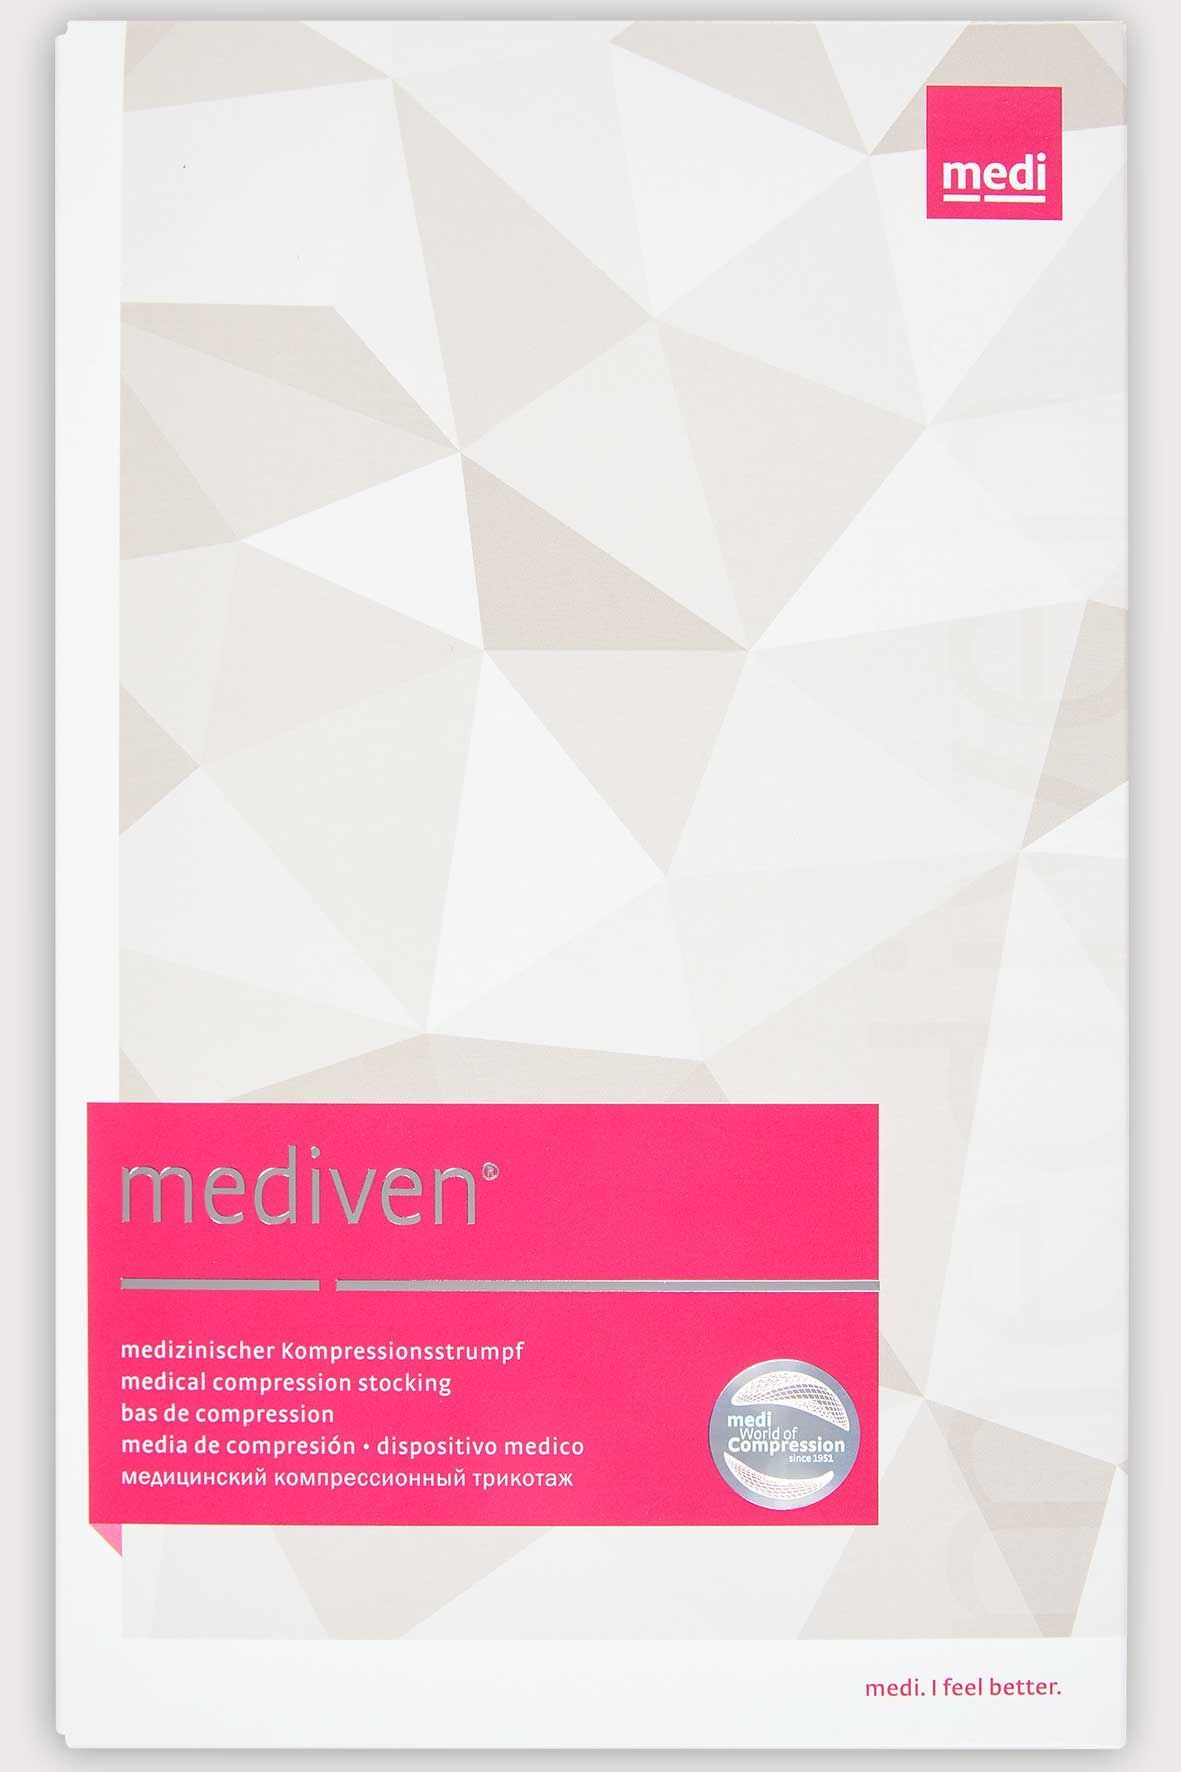 mediven elegance® Kompressionsstrumpfhose in Standardfarben, 91,95 €